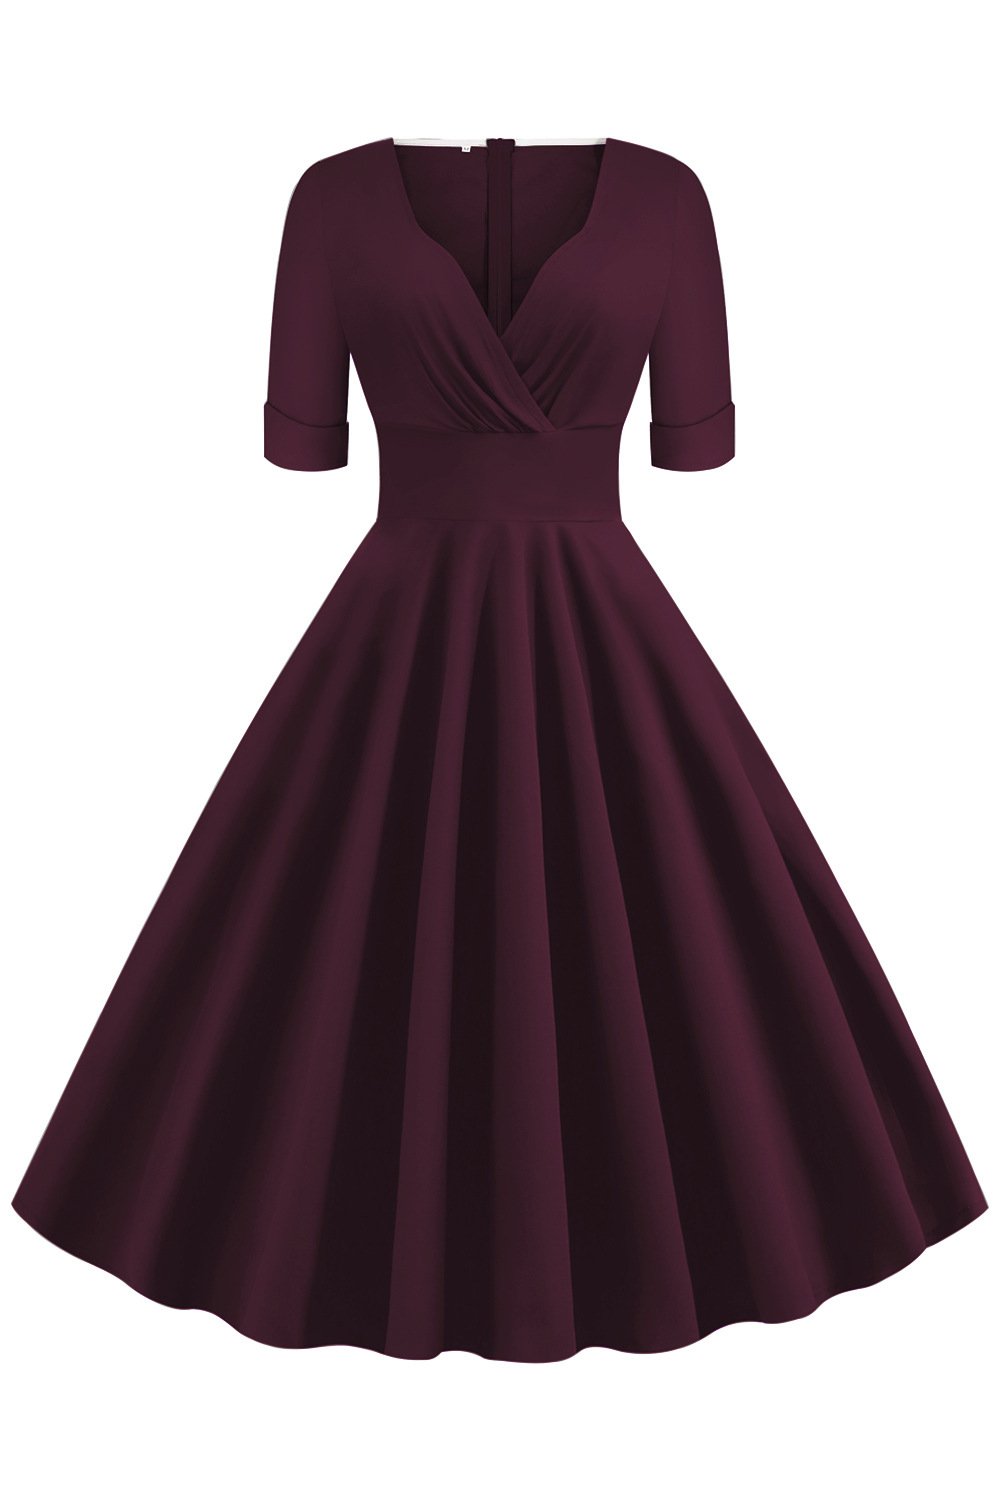 Vintage Short Sleeves V Neck Ball Dresses-Vintage Dresses-Dark Red-S-Free Shipping at meselling99